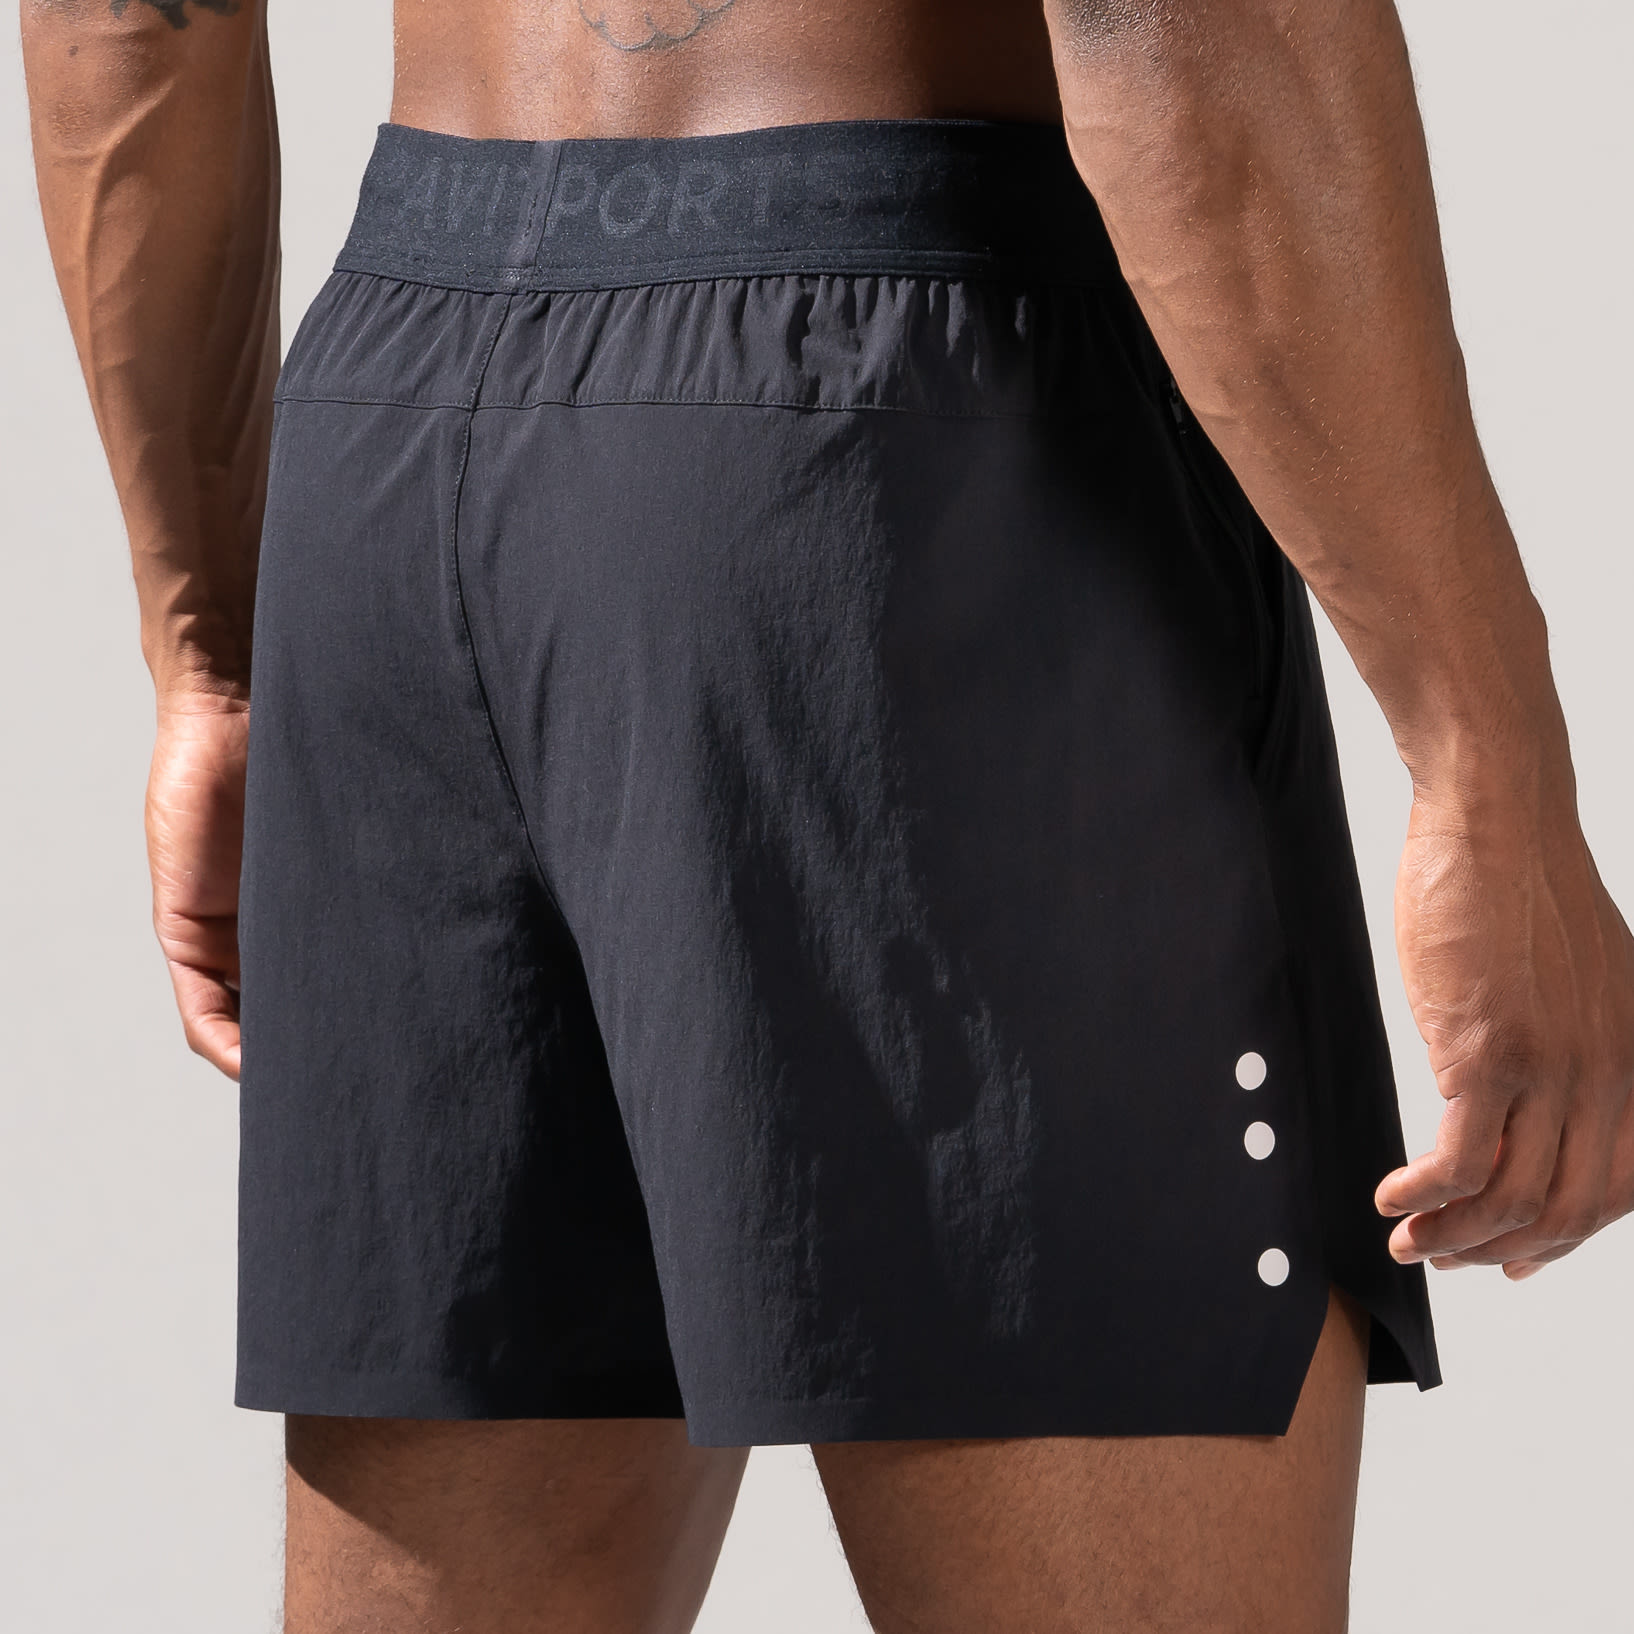 Side Back view of Male wearing OMORPHO Black O-Short gym shorts